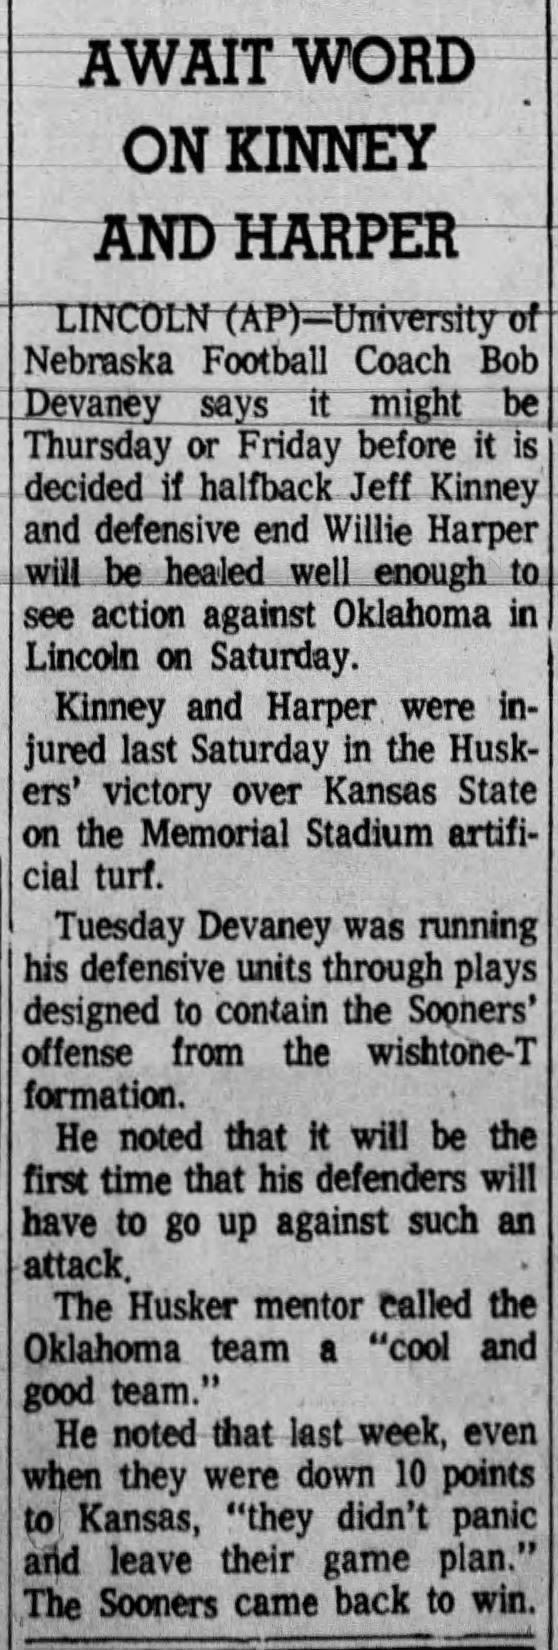 1970.11.17 Tuesday practice, Oklahoma week